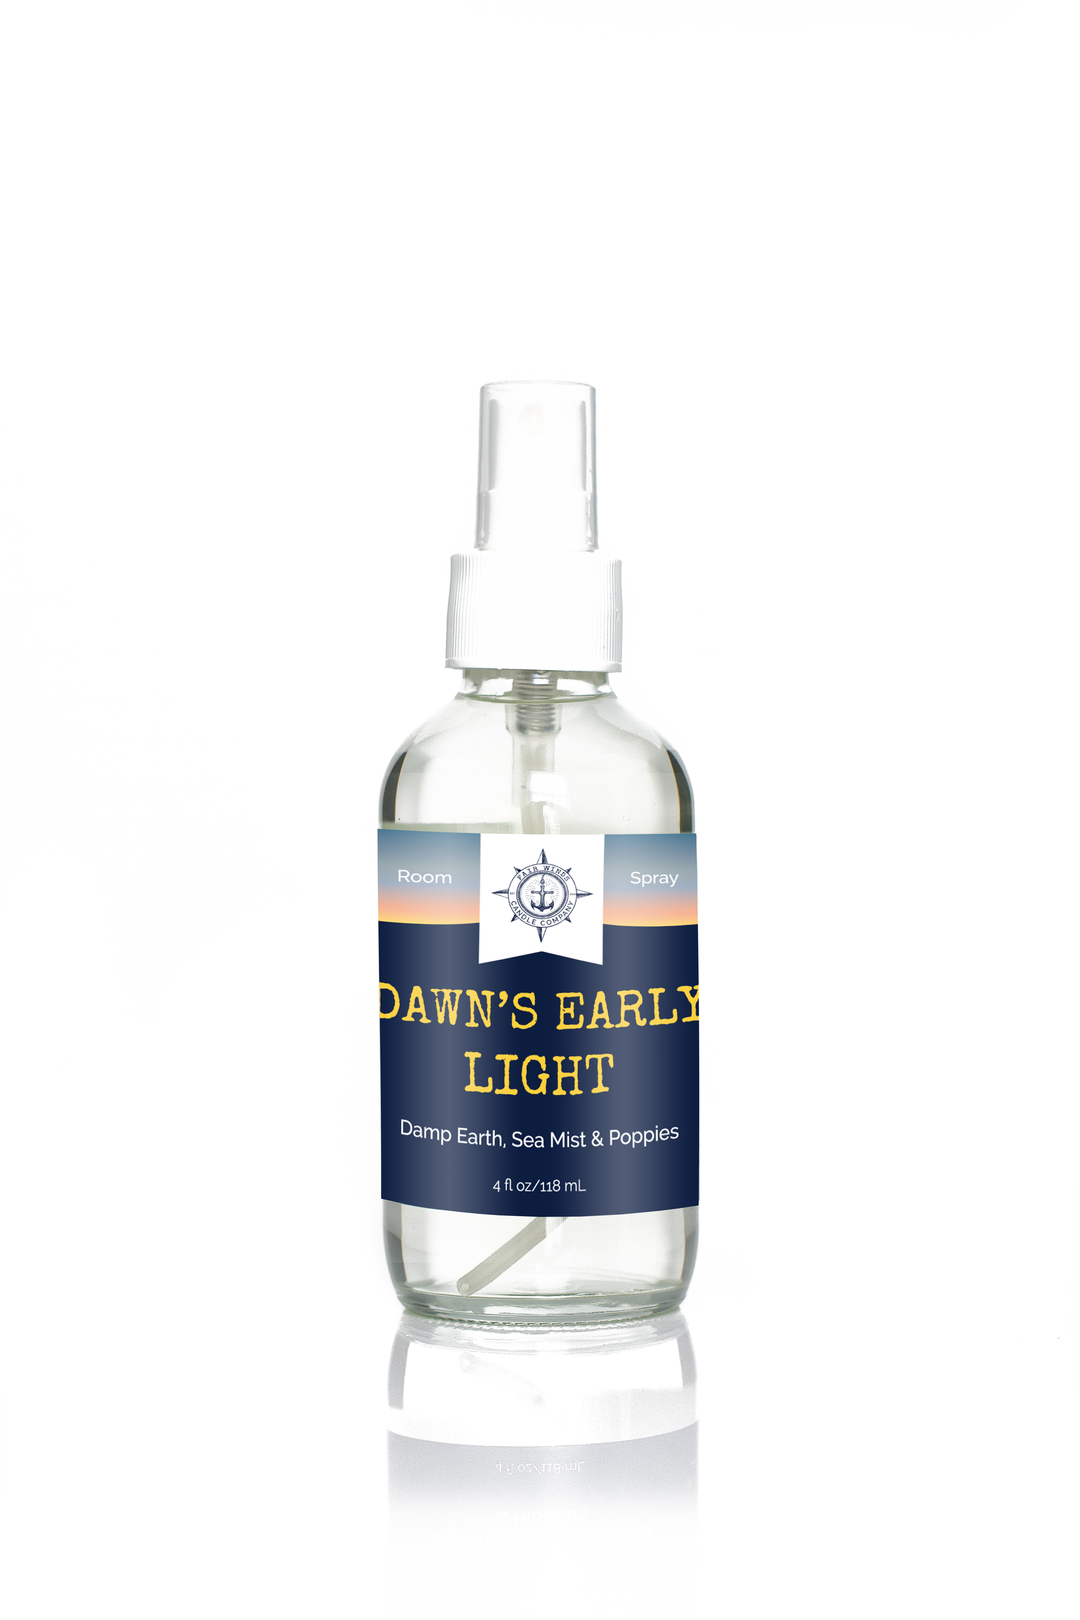 DAWN'S EARLY LIGHT room spray